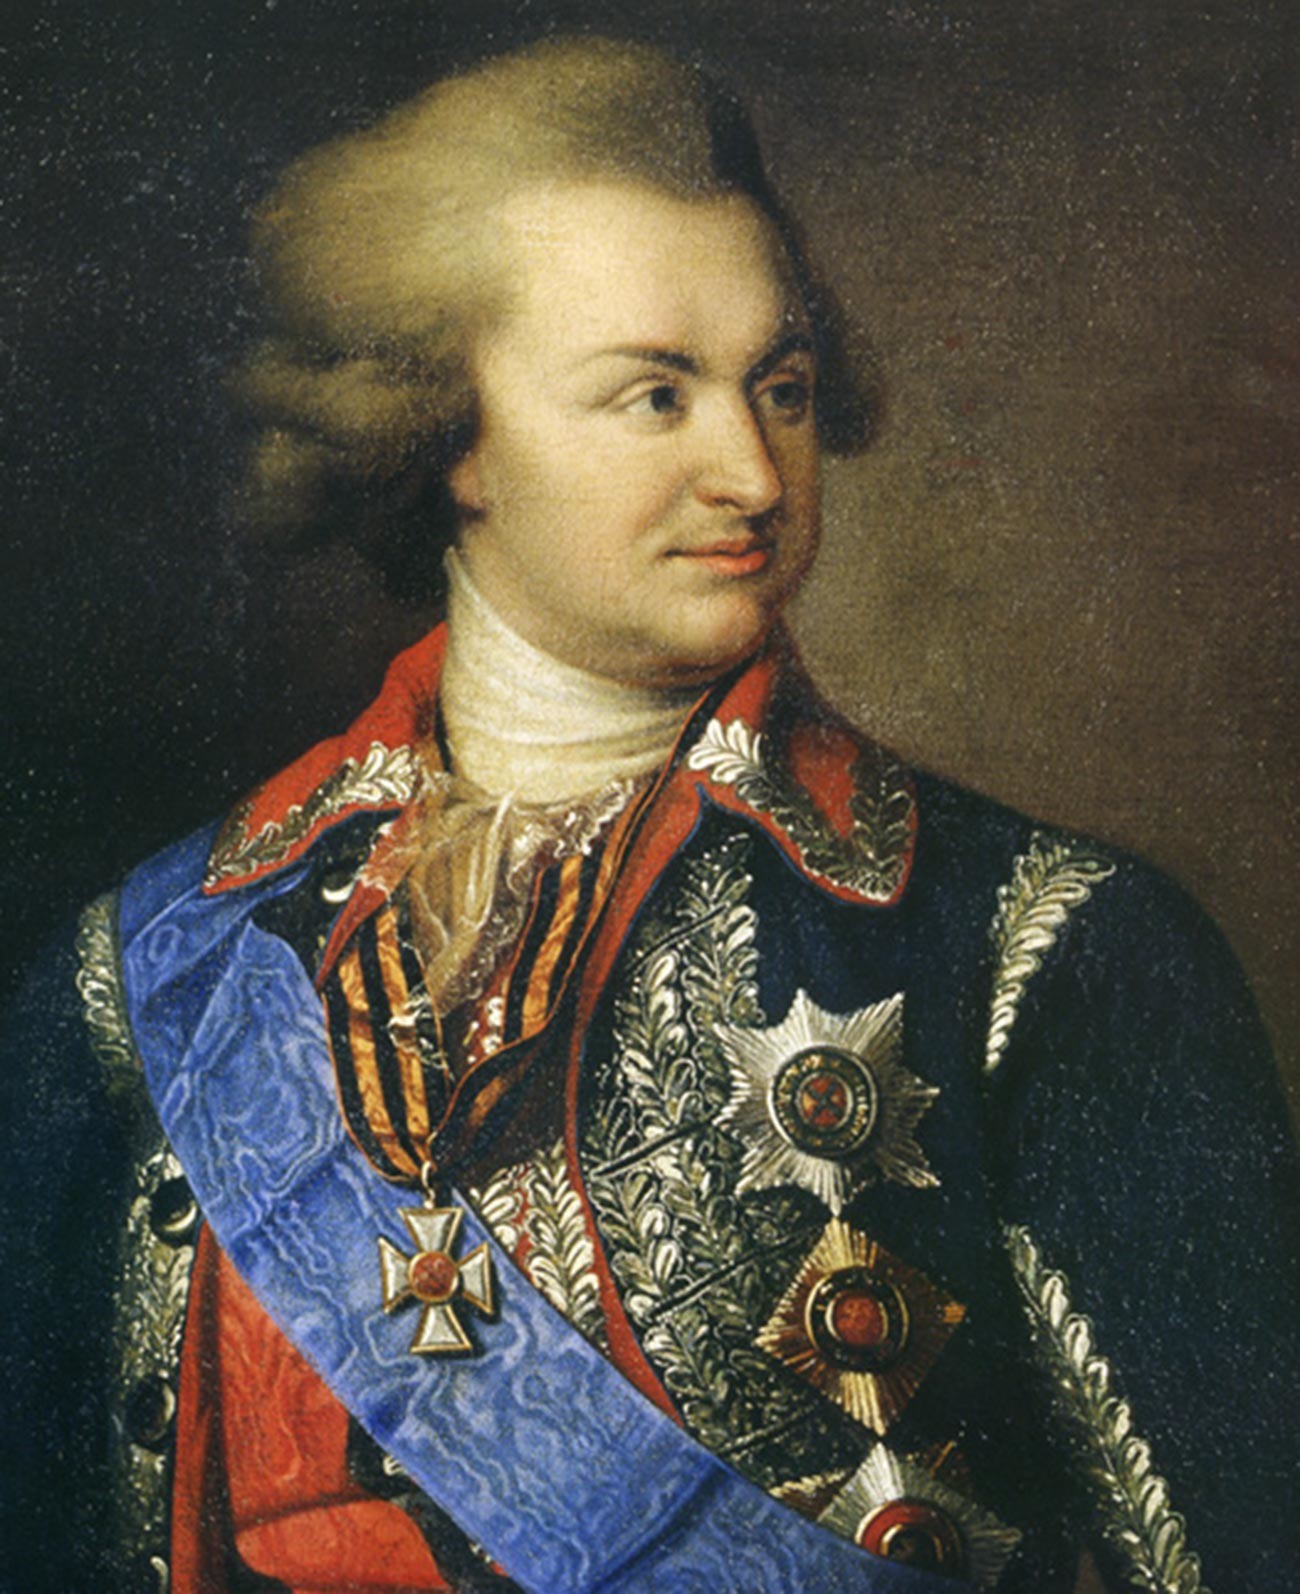 His Serene Highness Prince Grigory Potemkin.